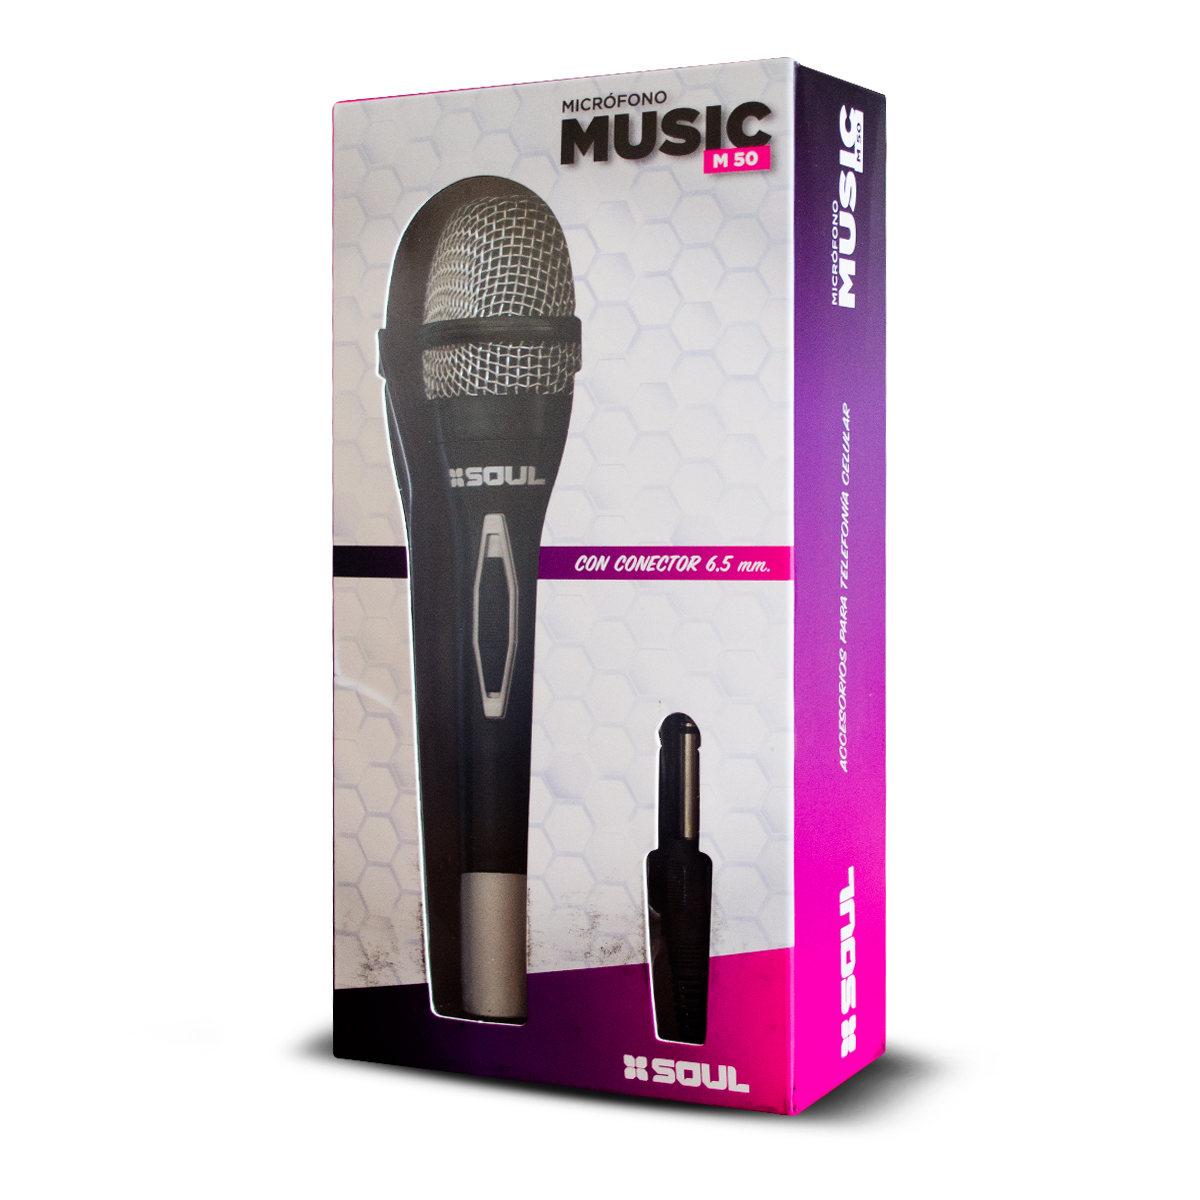 Micrófono Music M50